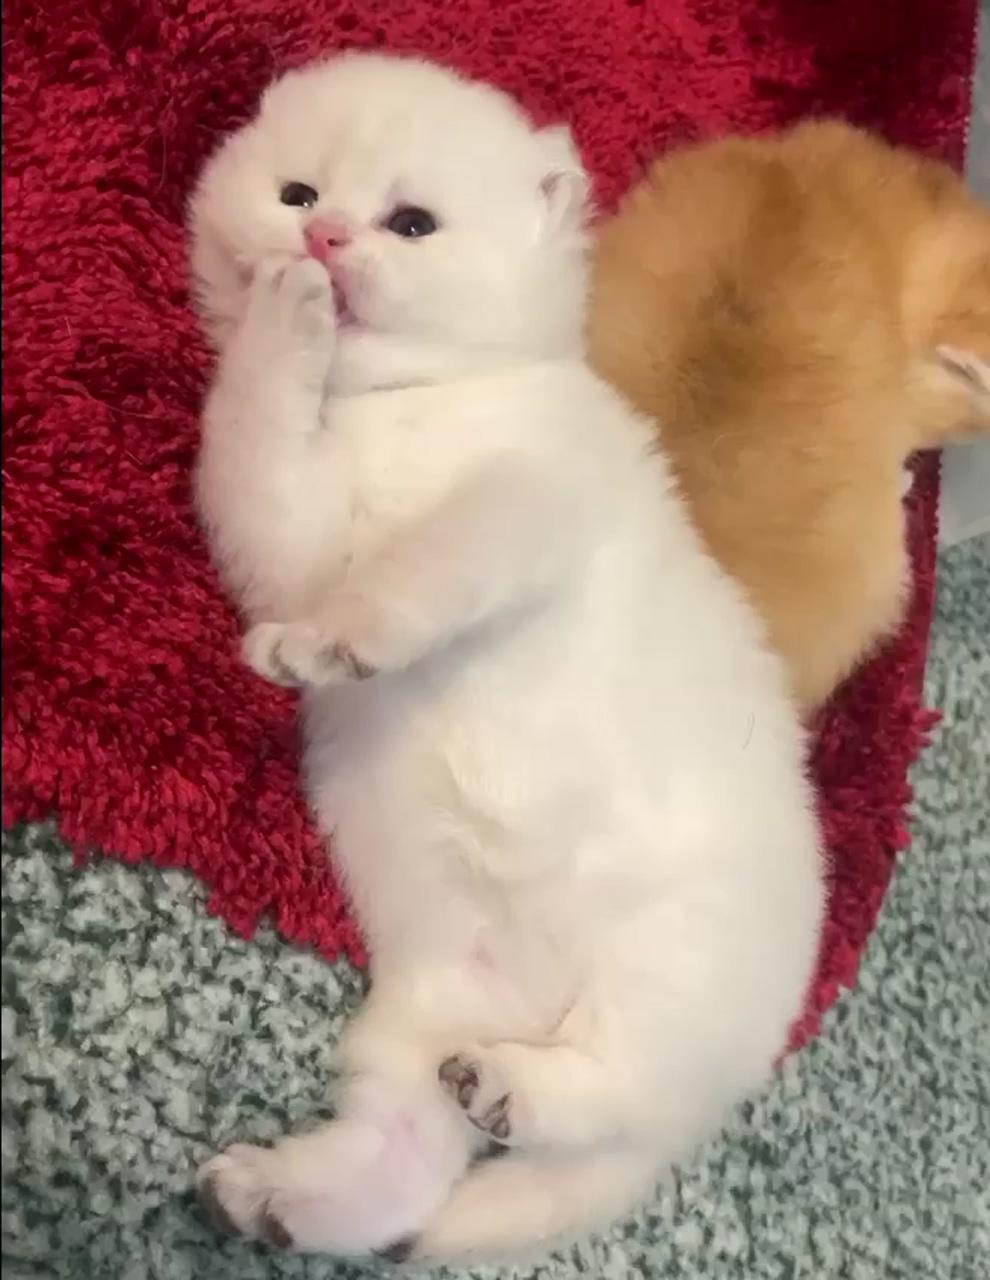 Baby kittens; kittens cutest